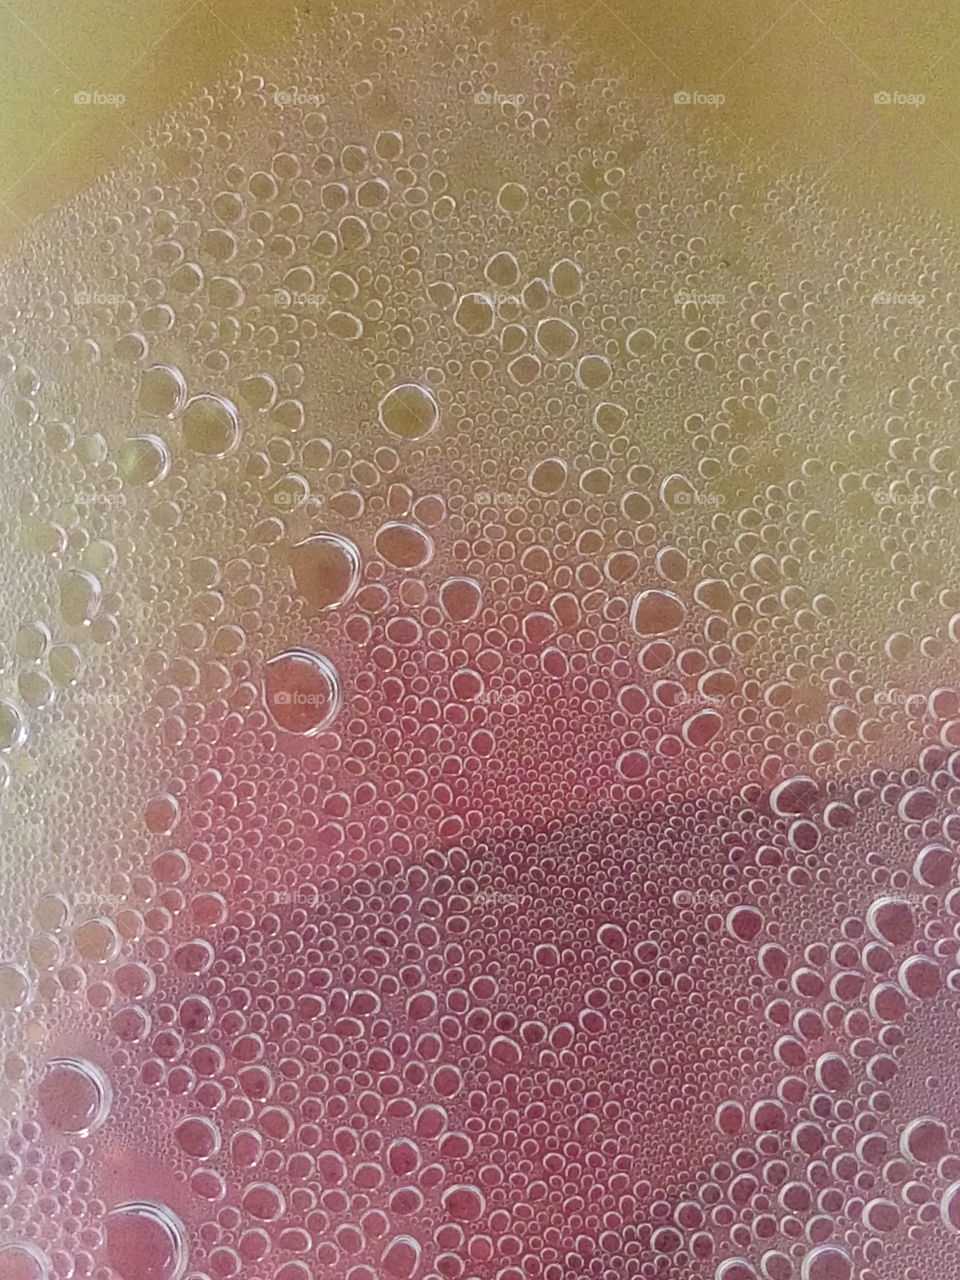 Bubbles - Red & Orange Background